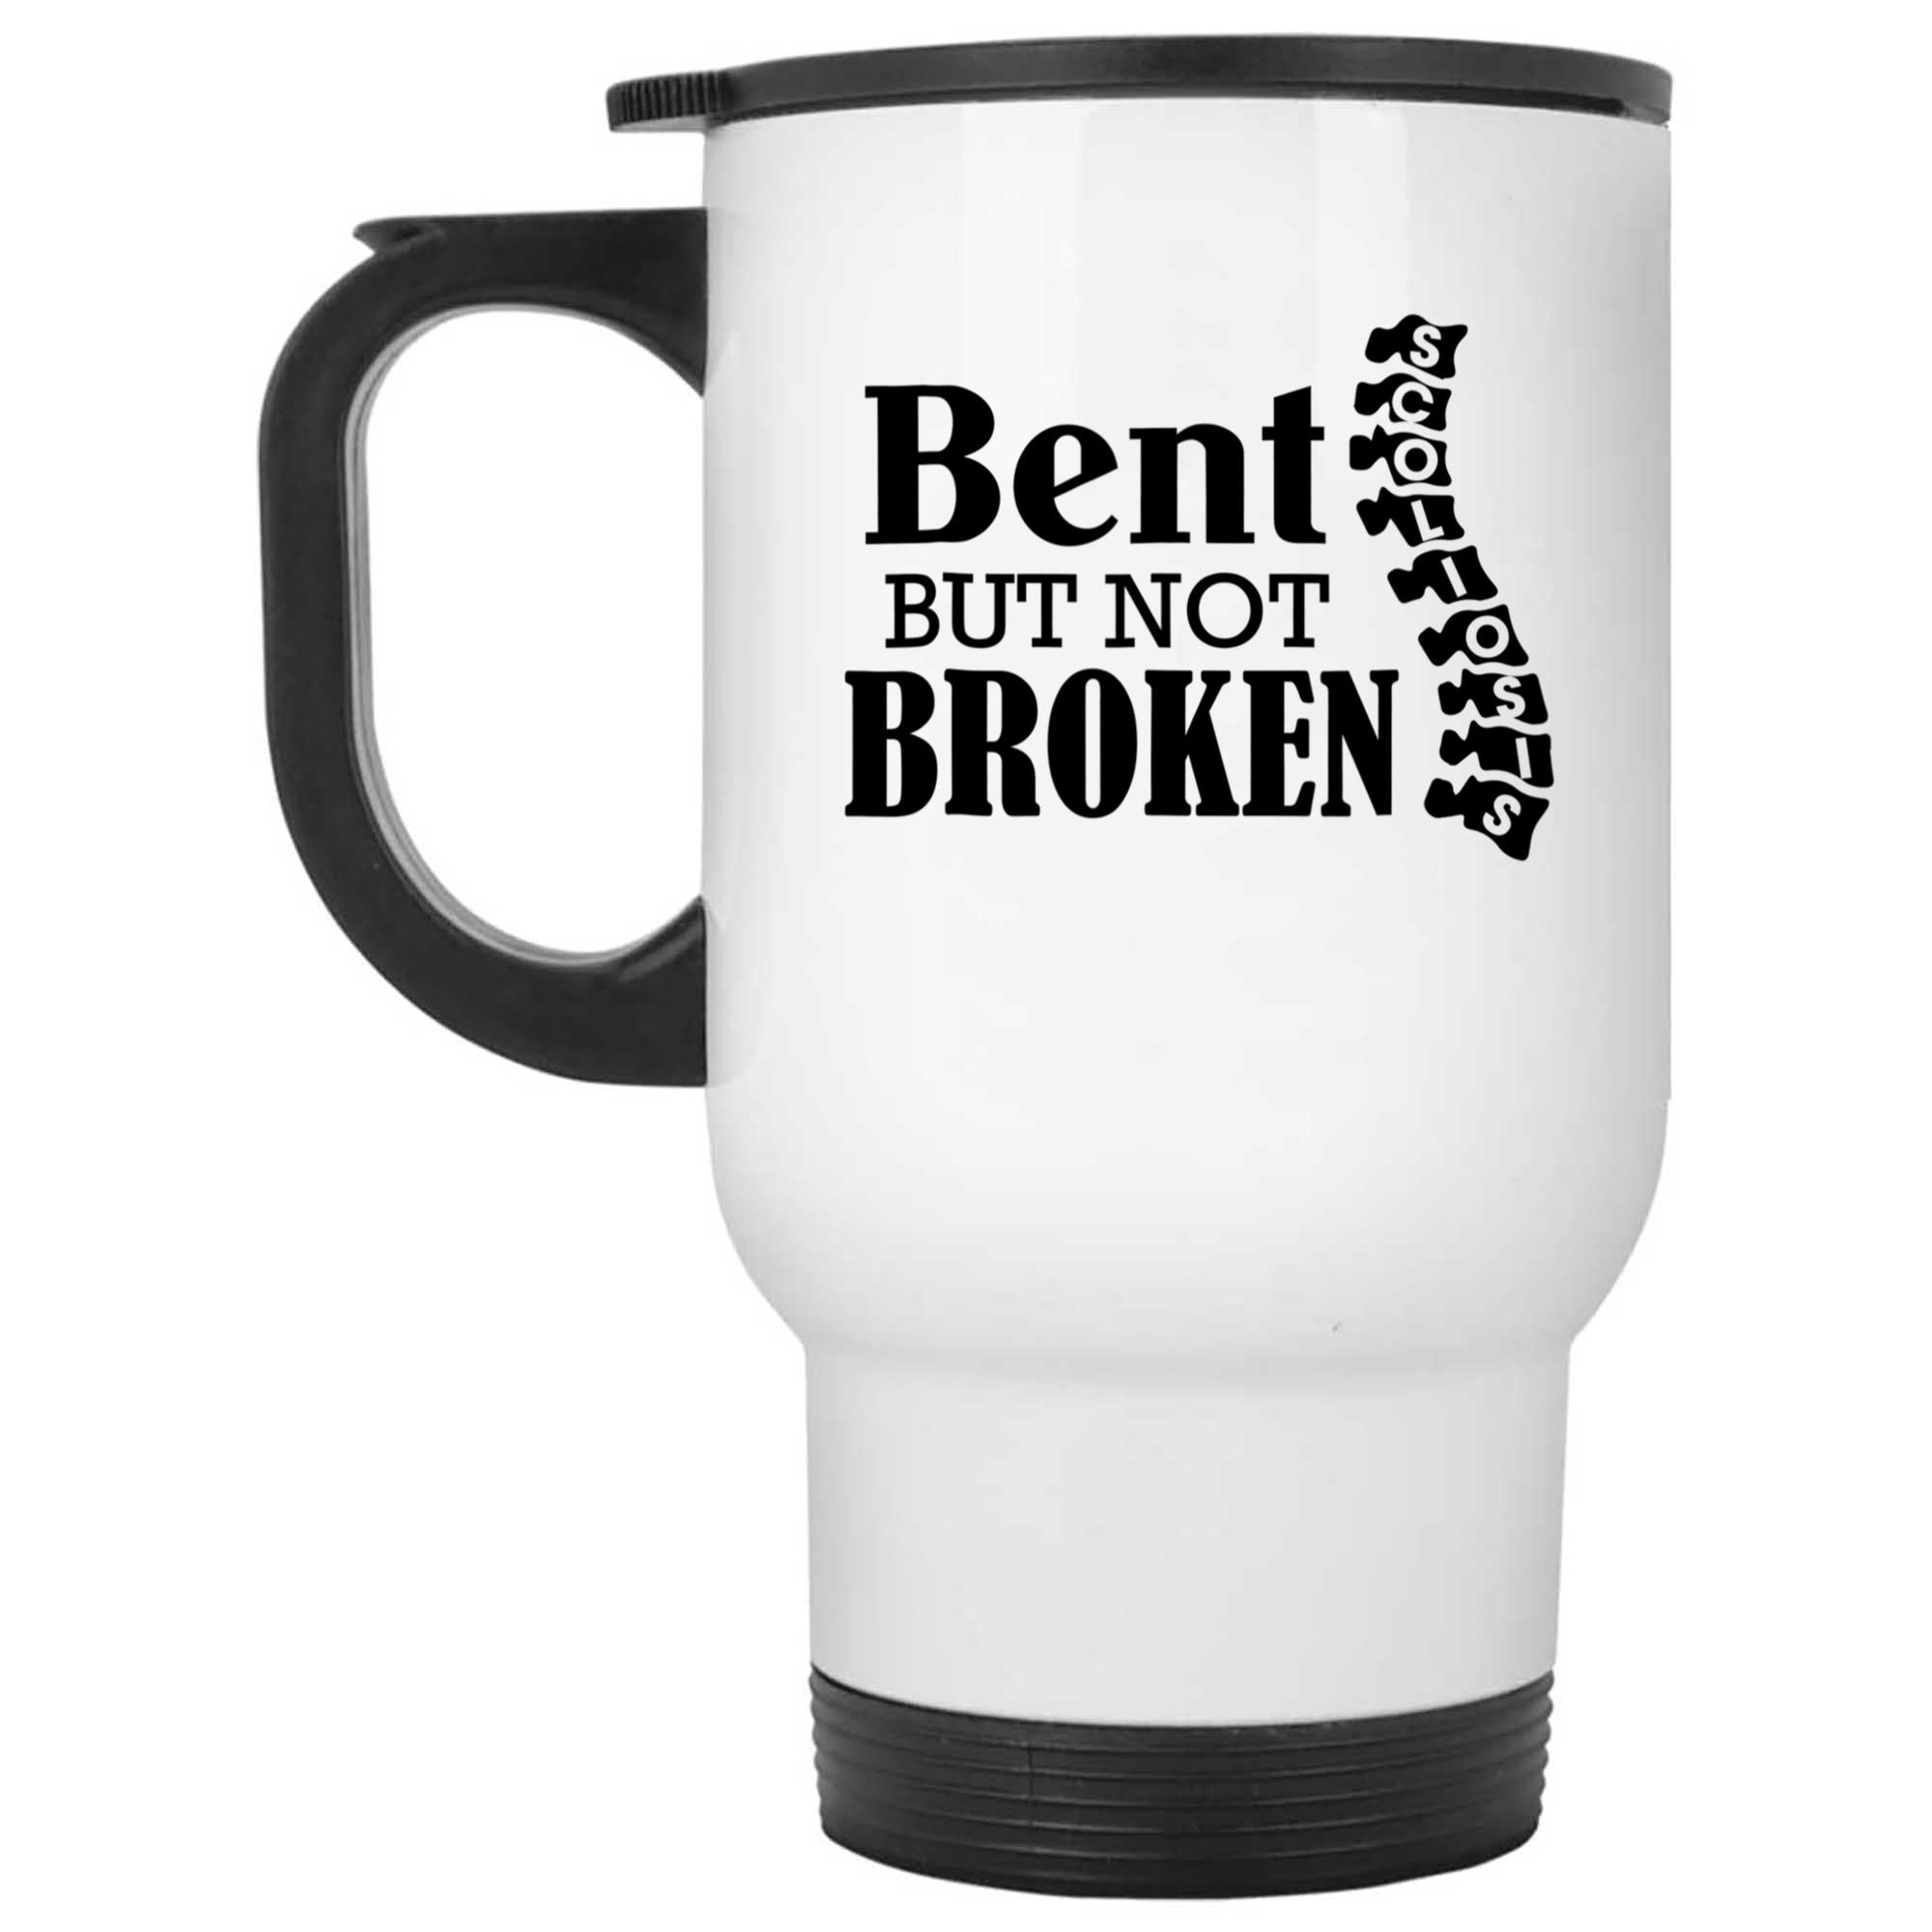 Skitongifts Funny Ceramic Novelty Coffee Mug Bent But Not Broken Scoliosis Warrior Awareness 2z9tZHj